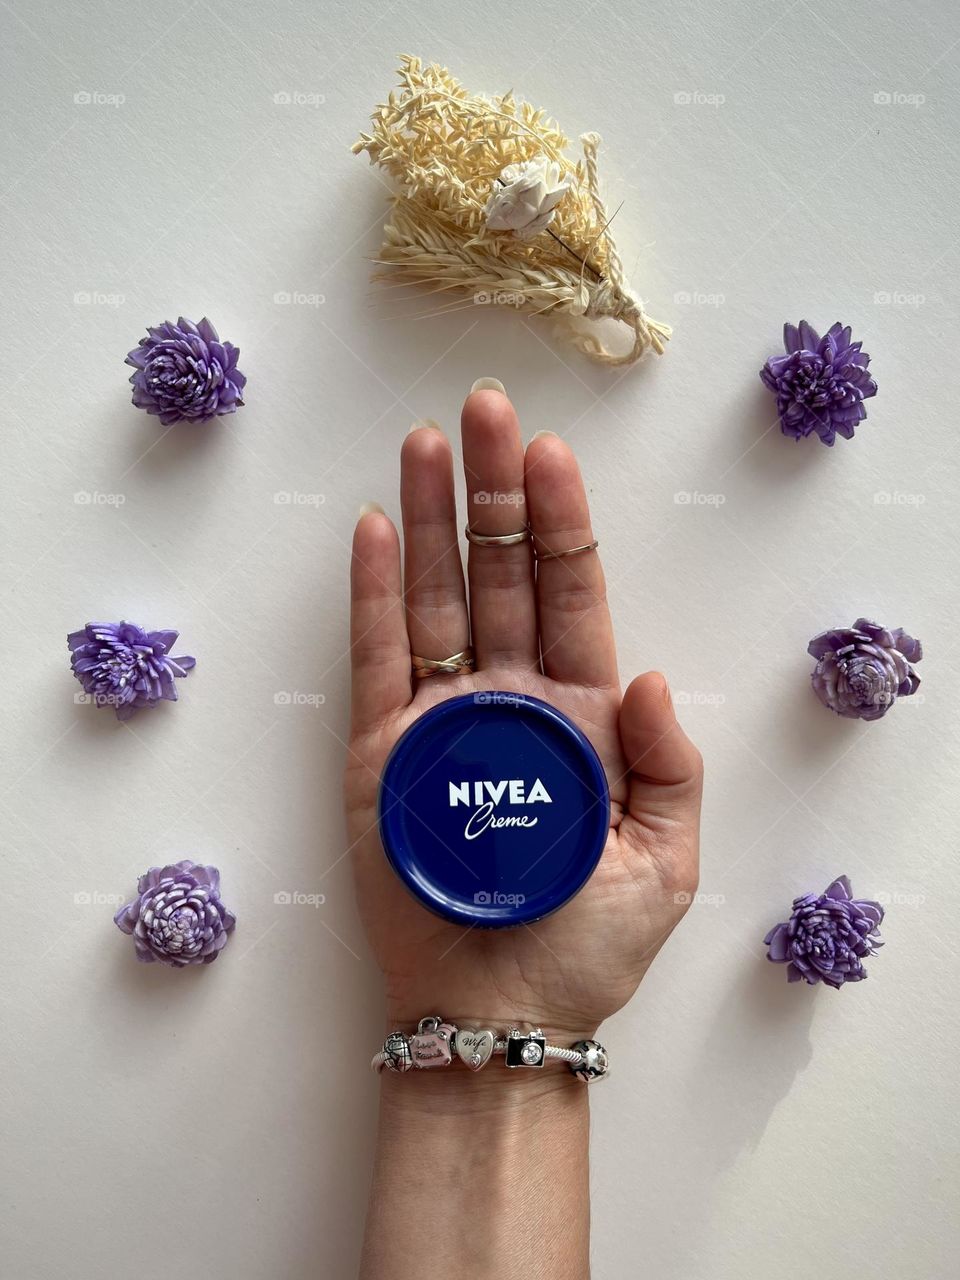 Famous beauty brand- Nivea cosmetic, hand holding the Nivea cream.